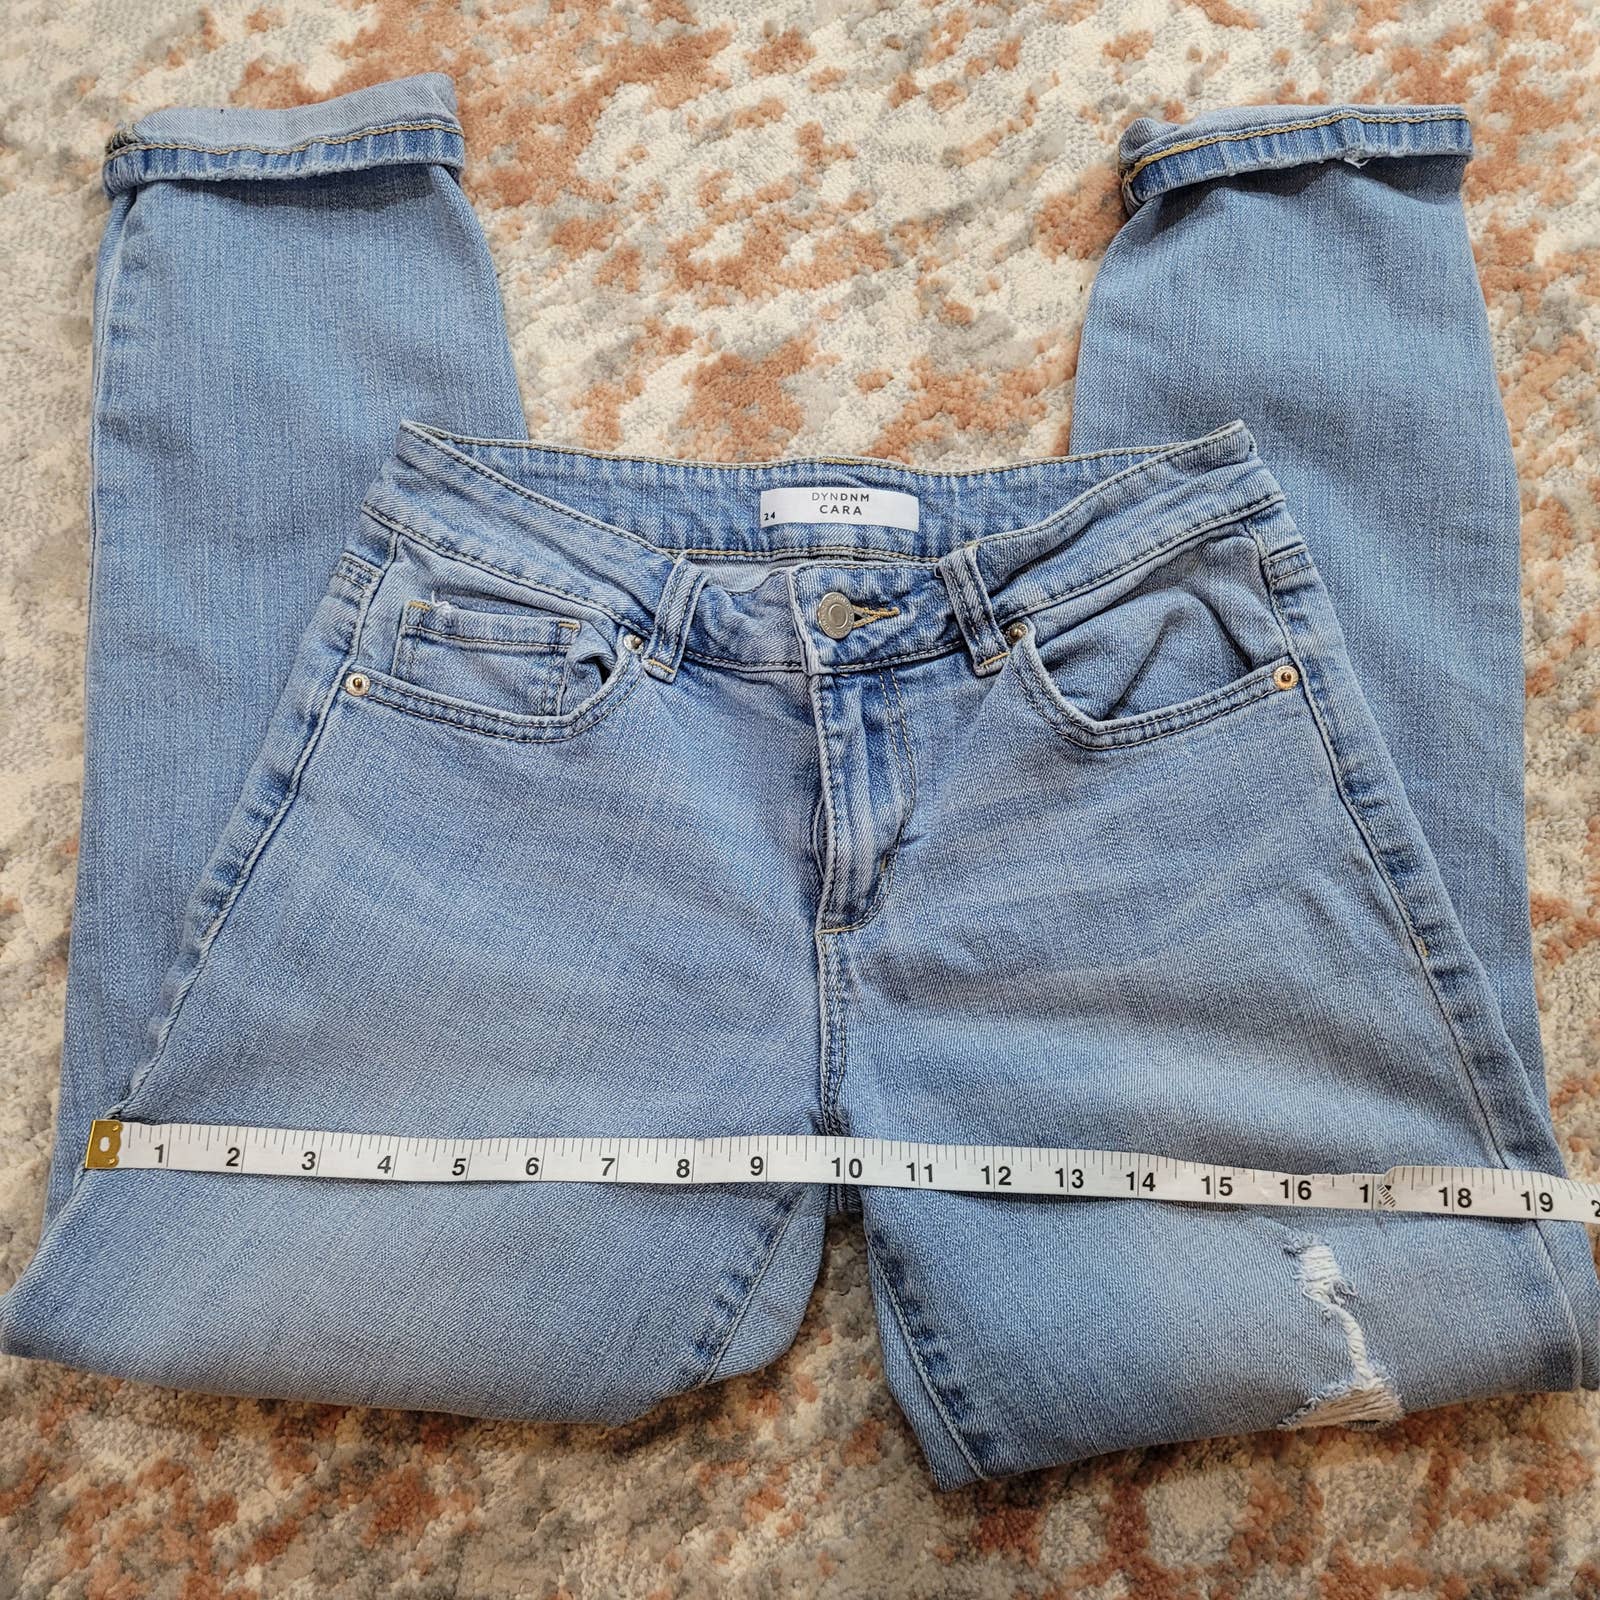 Dynamite Denim Cara Light Wash Distressed Jeans - Size 24Markita's ClosetDynamite